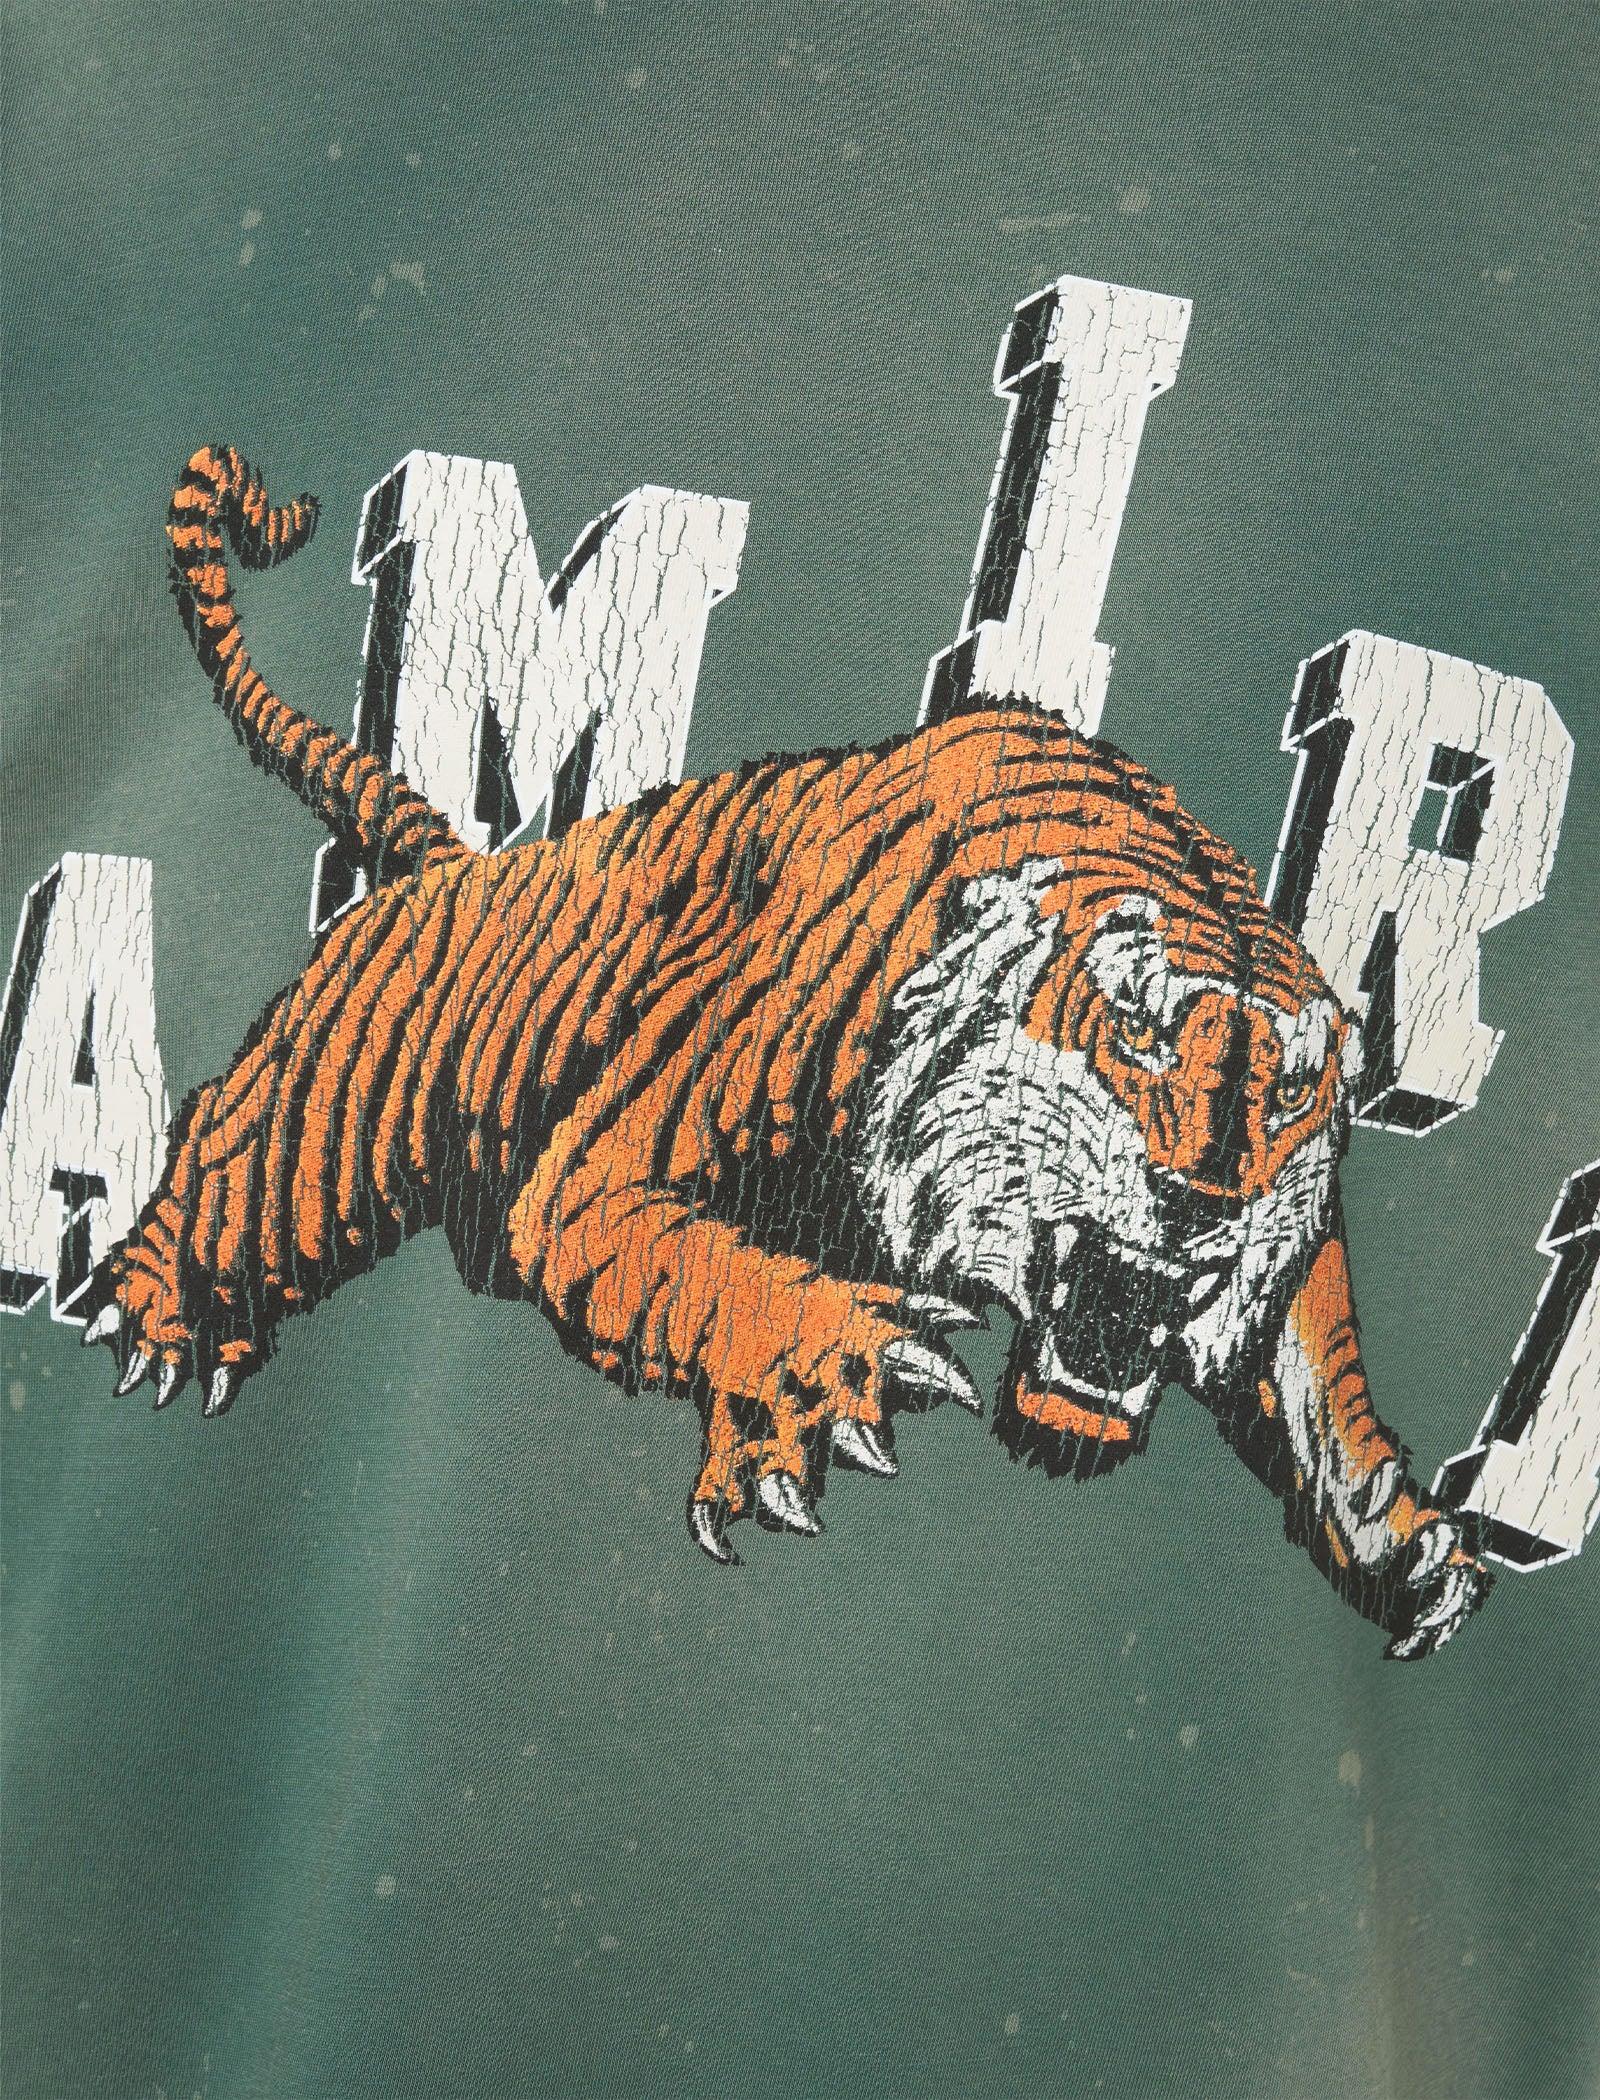 Amiri Men's Collegiate Tiger Crewneck T-Shirt